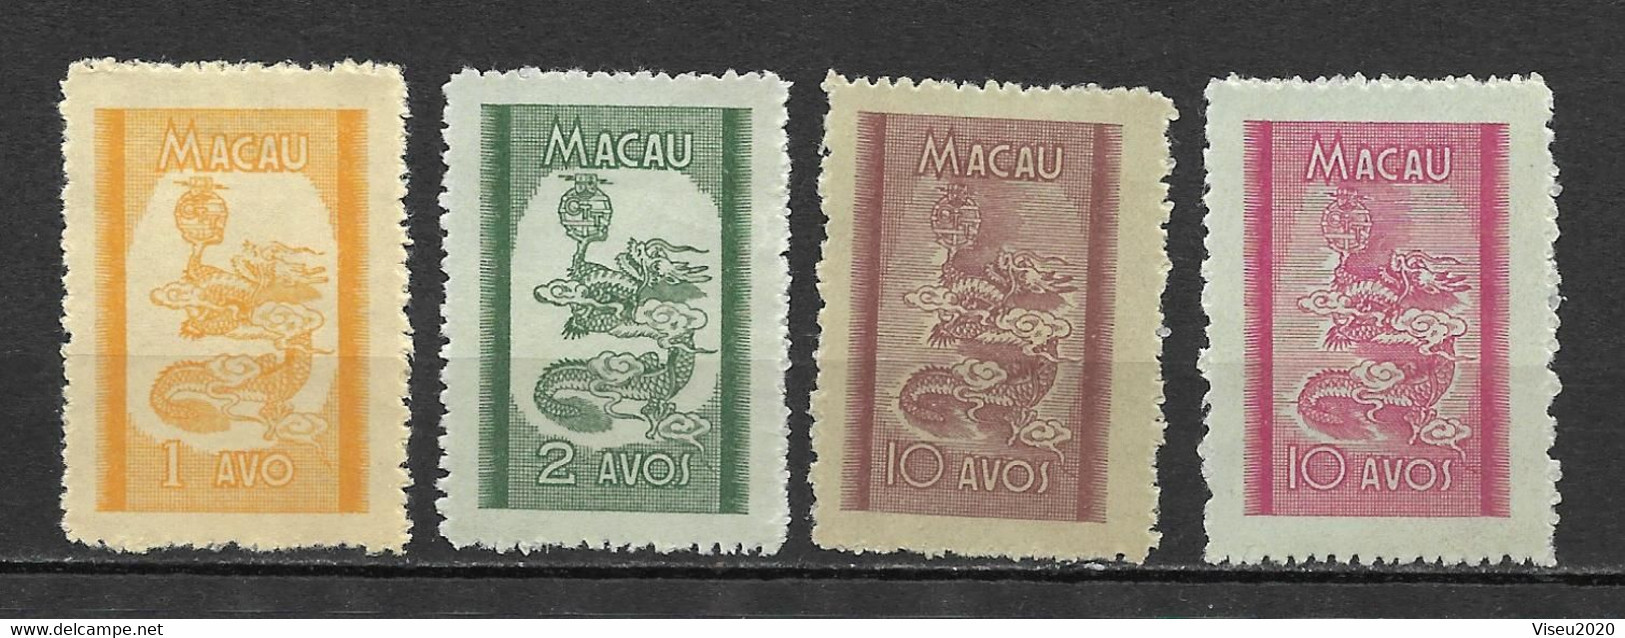 Portugal (Macau) 1950 – Dragões (Dragons) Emissão Local -  Complet Set Macao - Nuovi